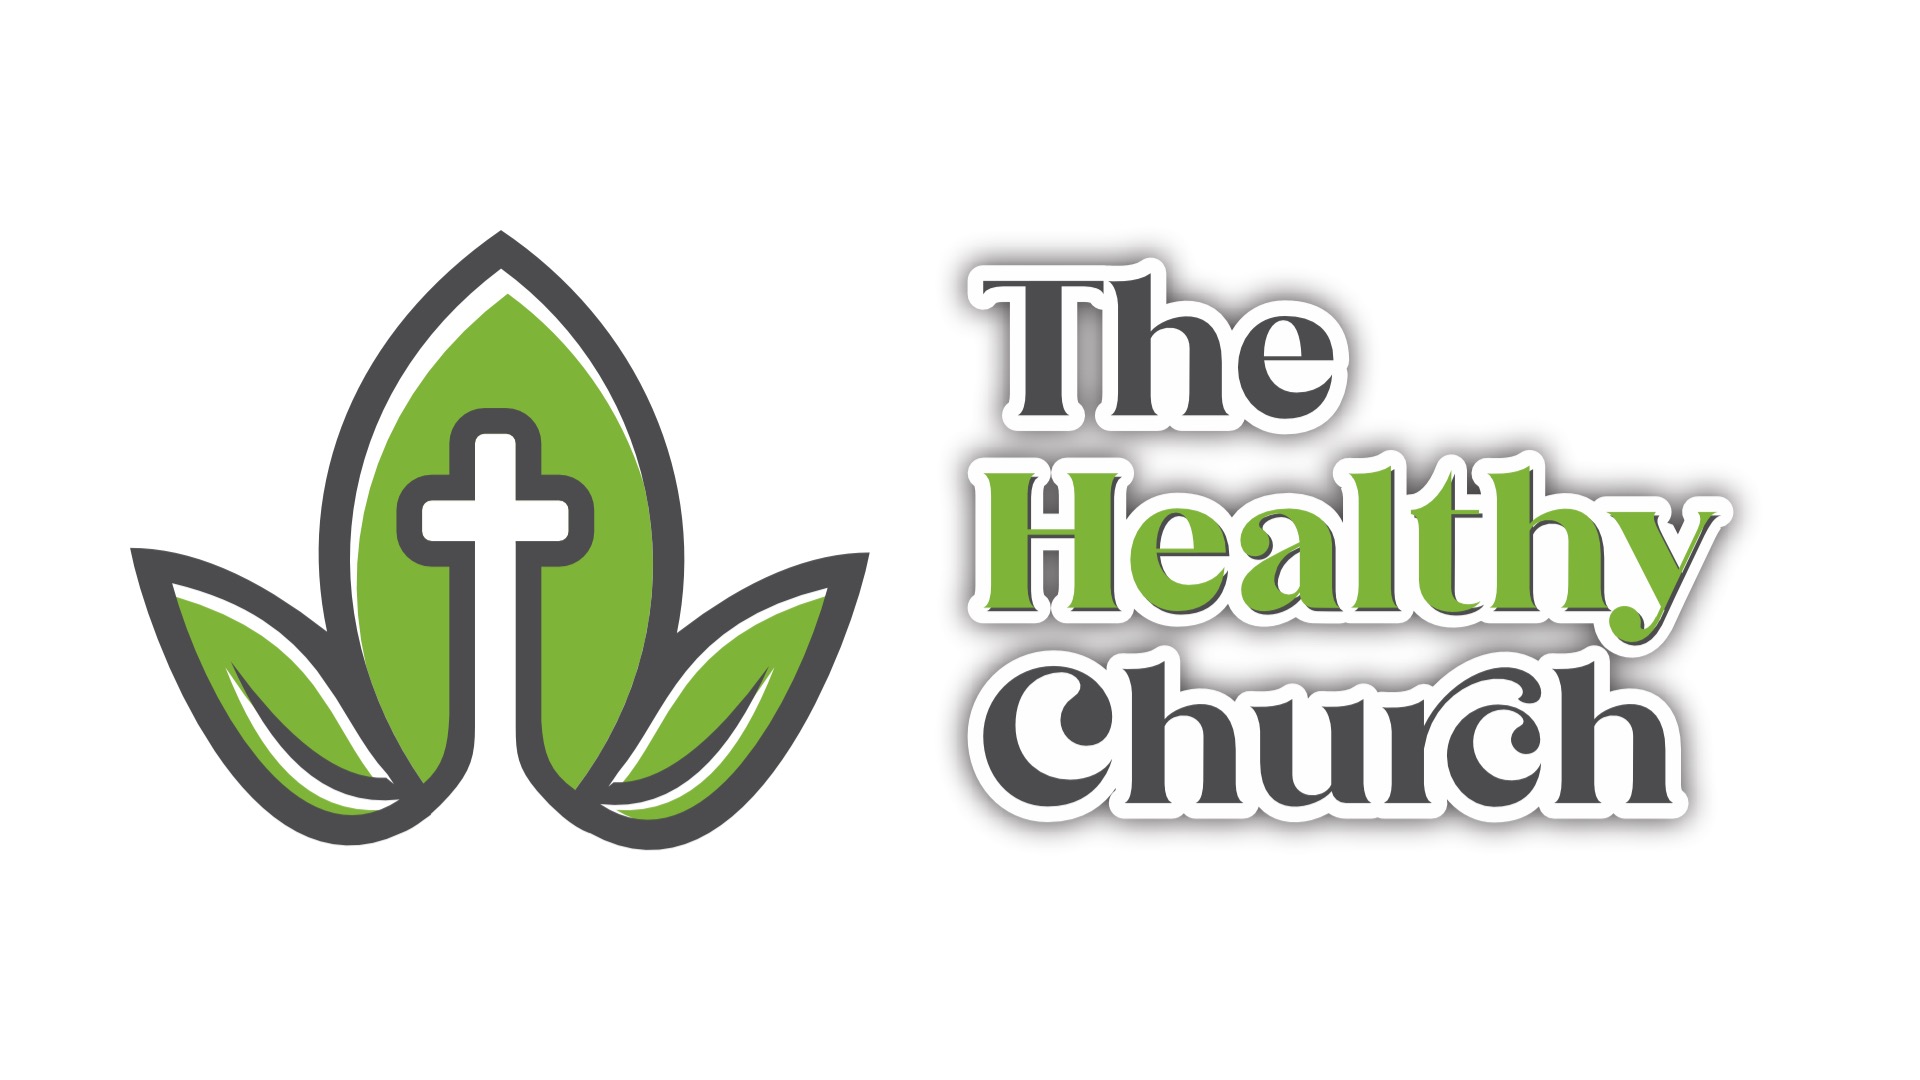 The Healthy Church CloseKnit Community